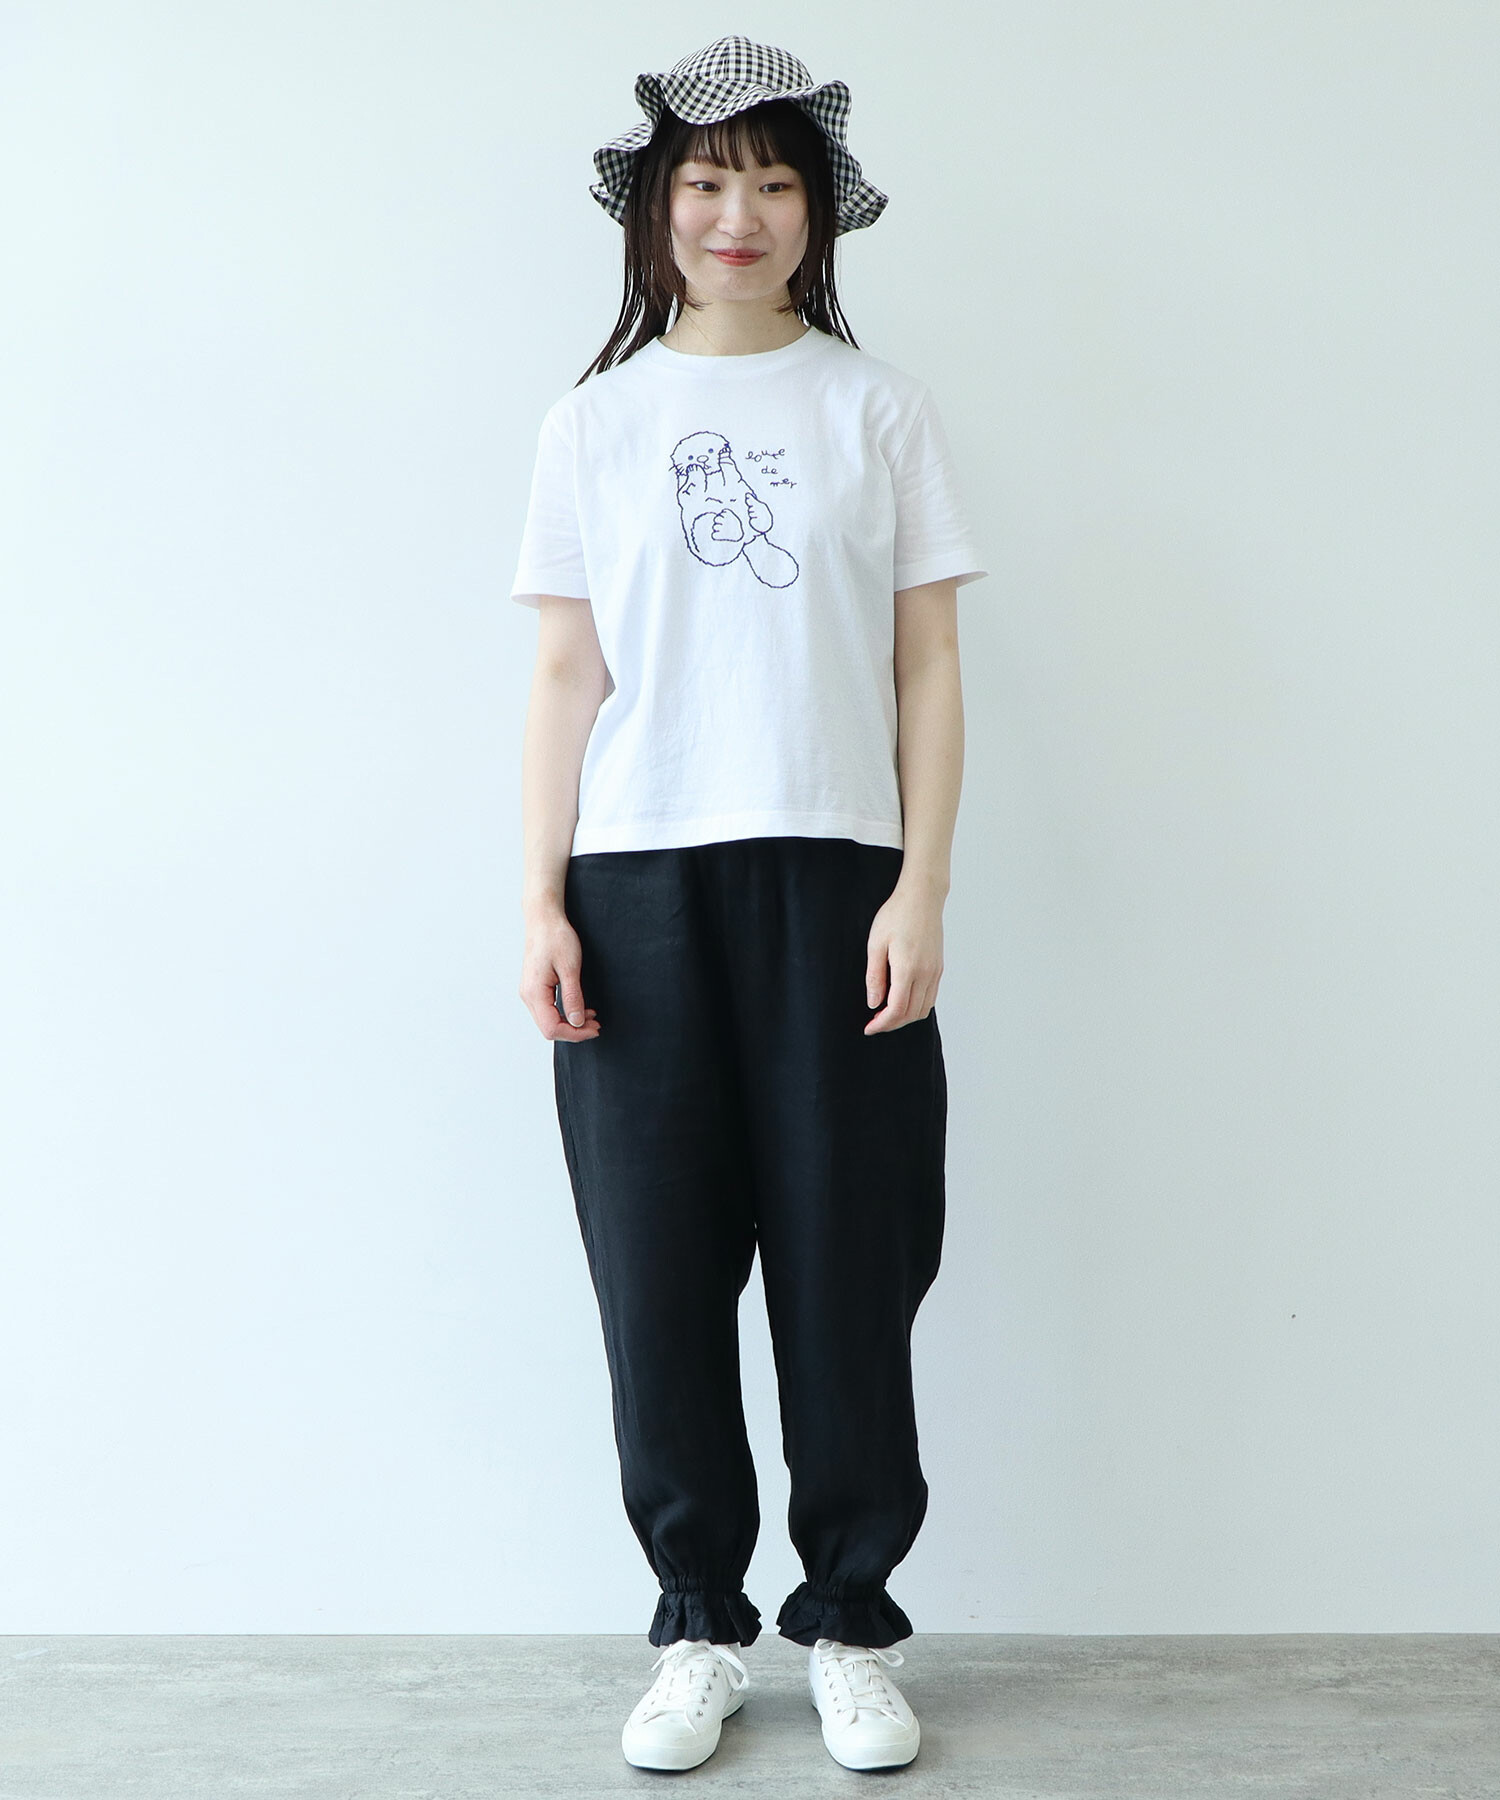 AMBIDEX Store 【予約販売】○ラッコ刺繍 Tシャツ(F シロ): bulle de savon